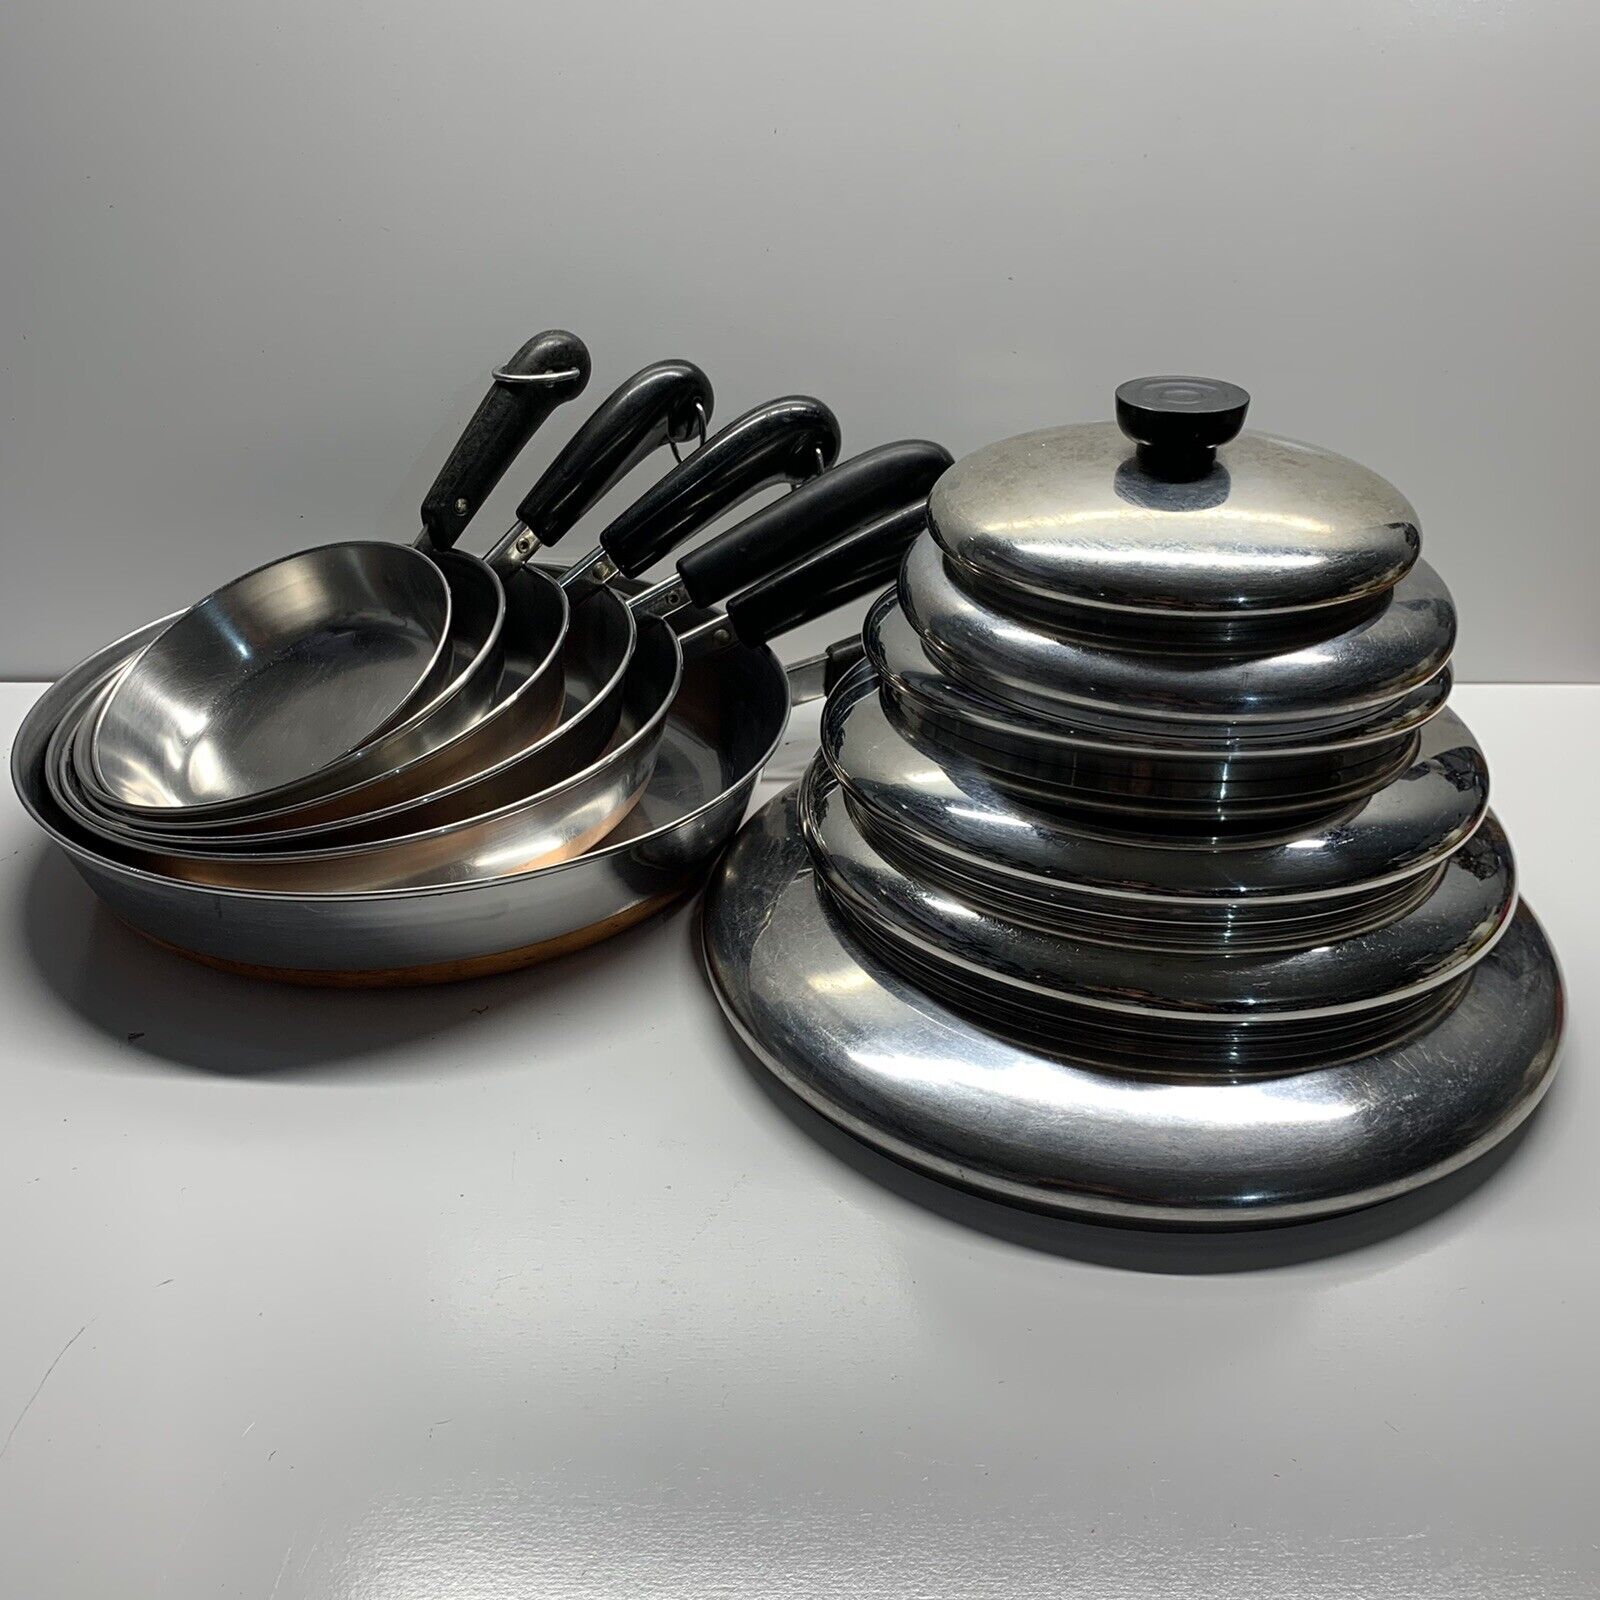 12 Piece Vintage Revere Ware Lot Copper Bottom Cookware Pan Skillet Set W/ Lids